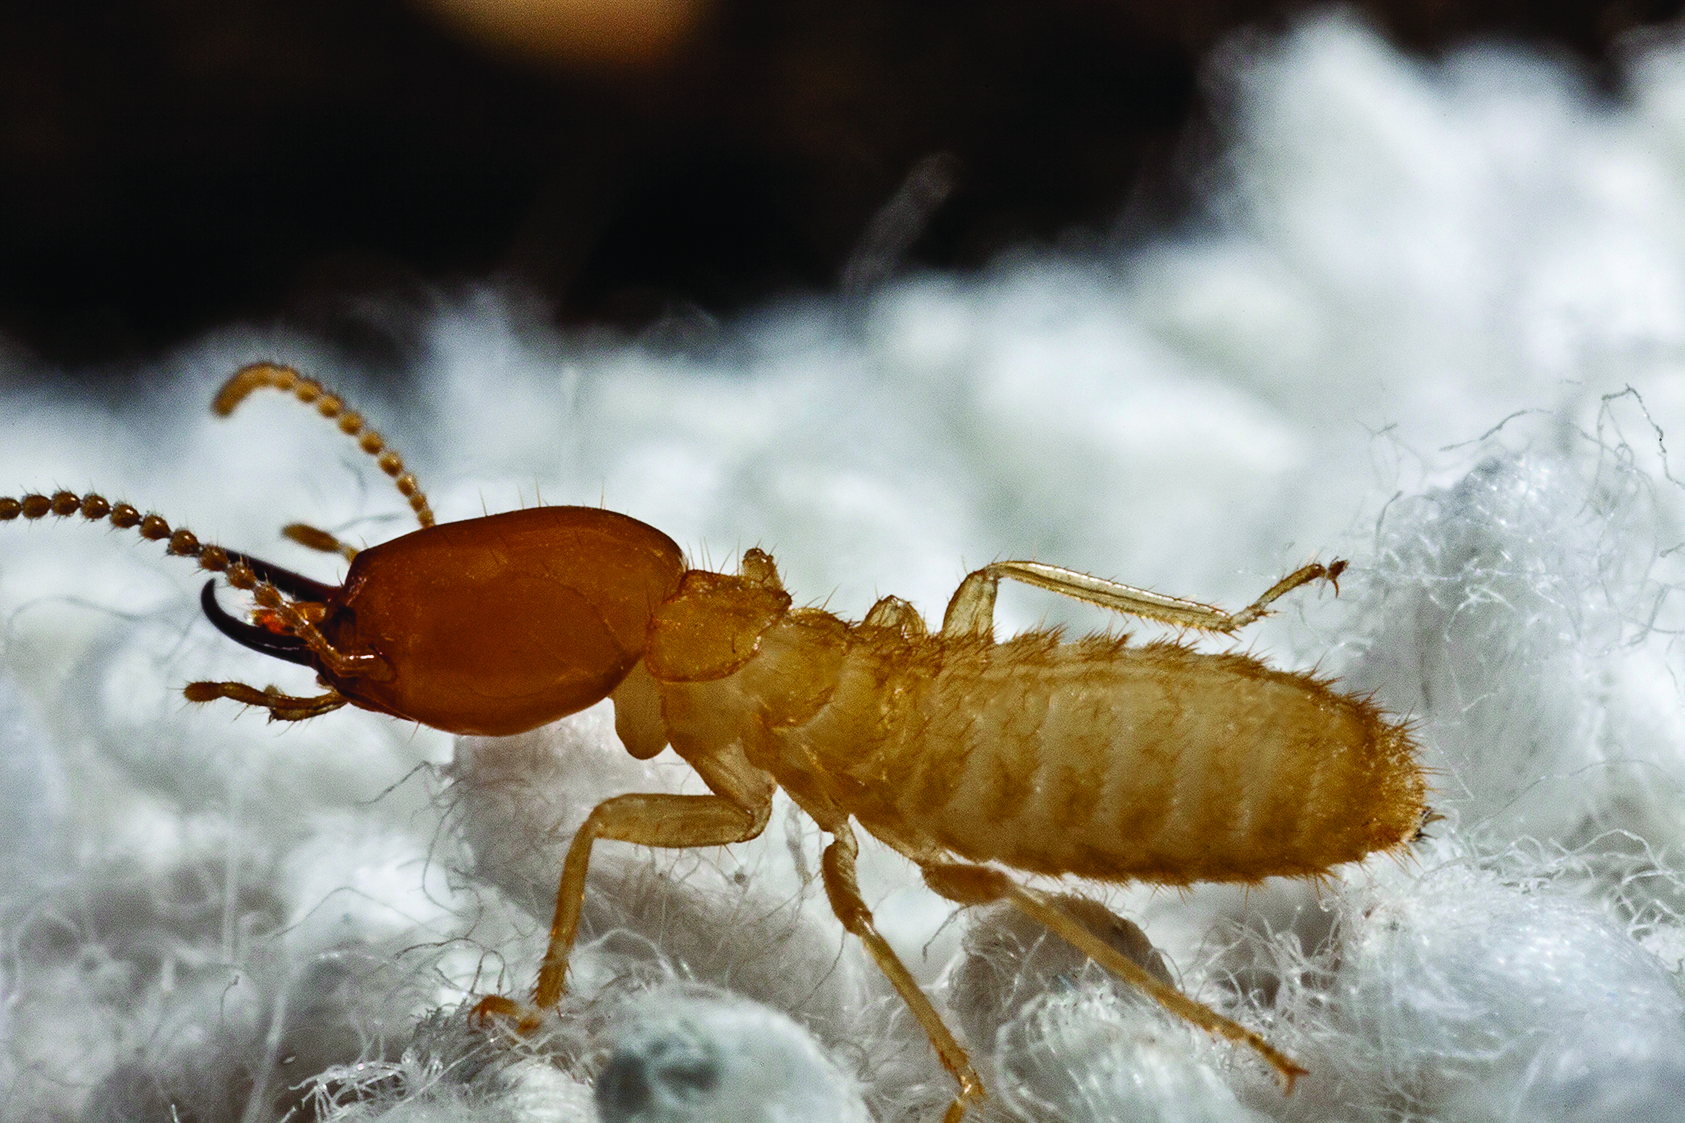 Termite Experts